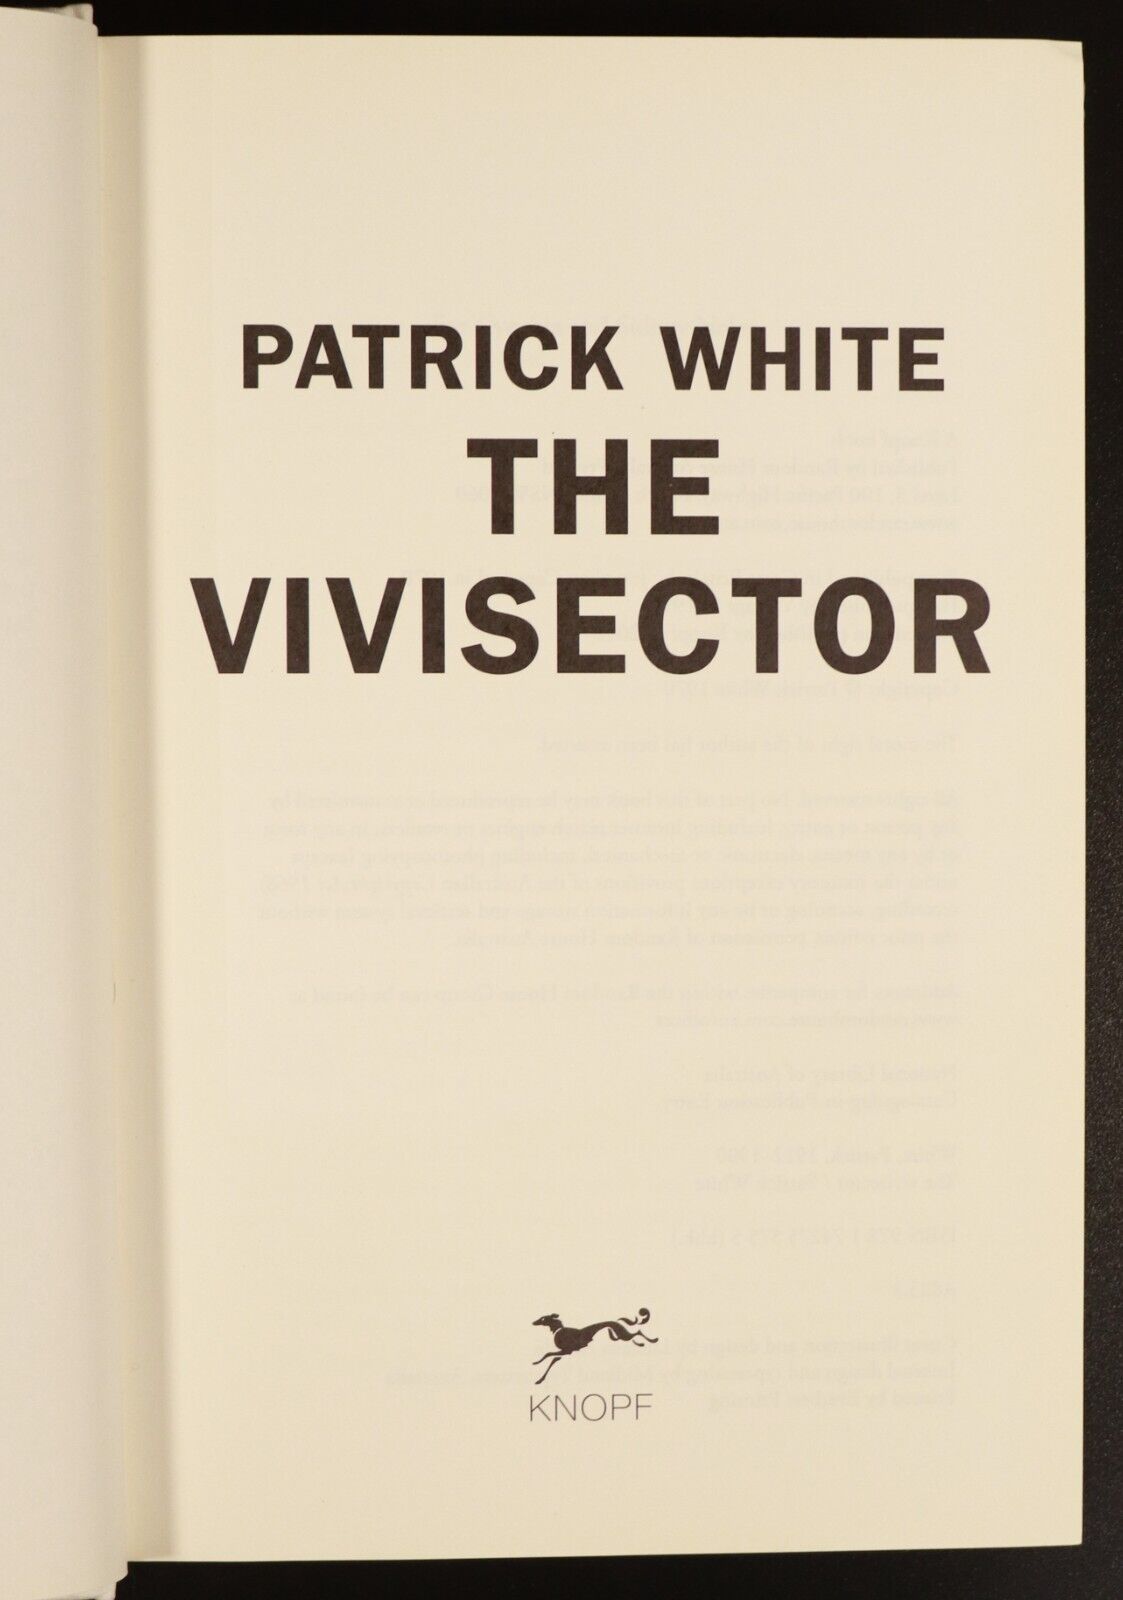 2012 The Vivisector by Patrick White Australian Fiction Book